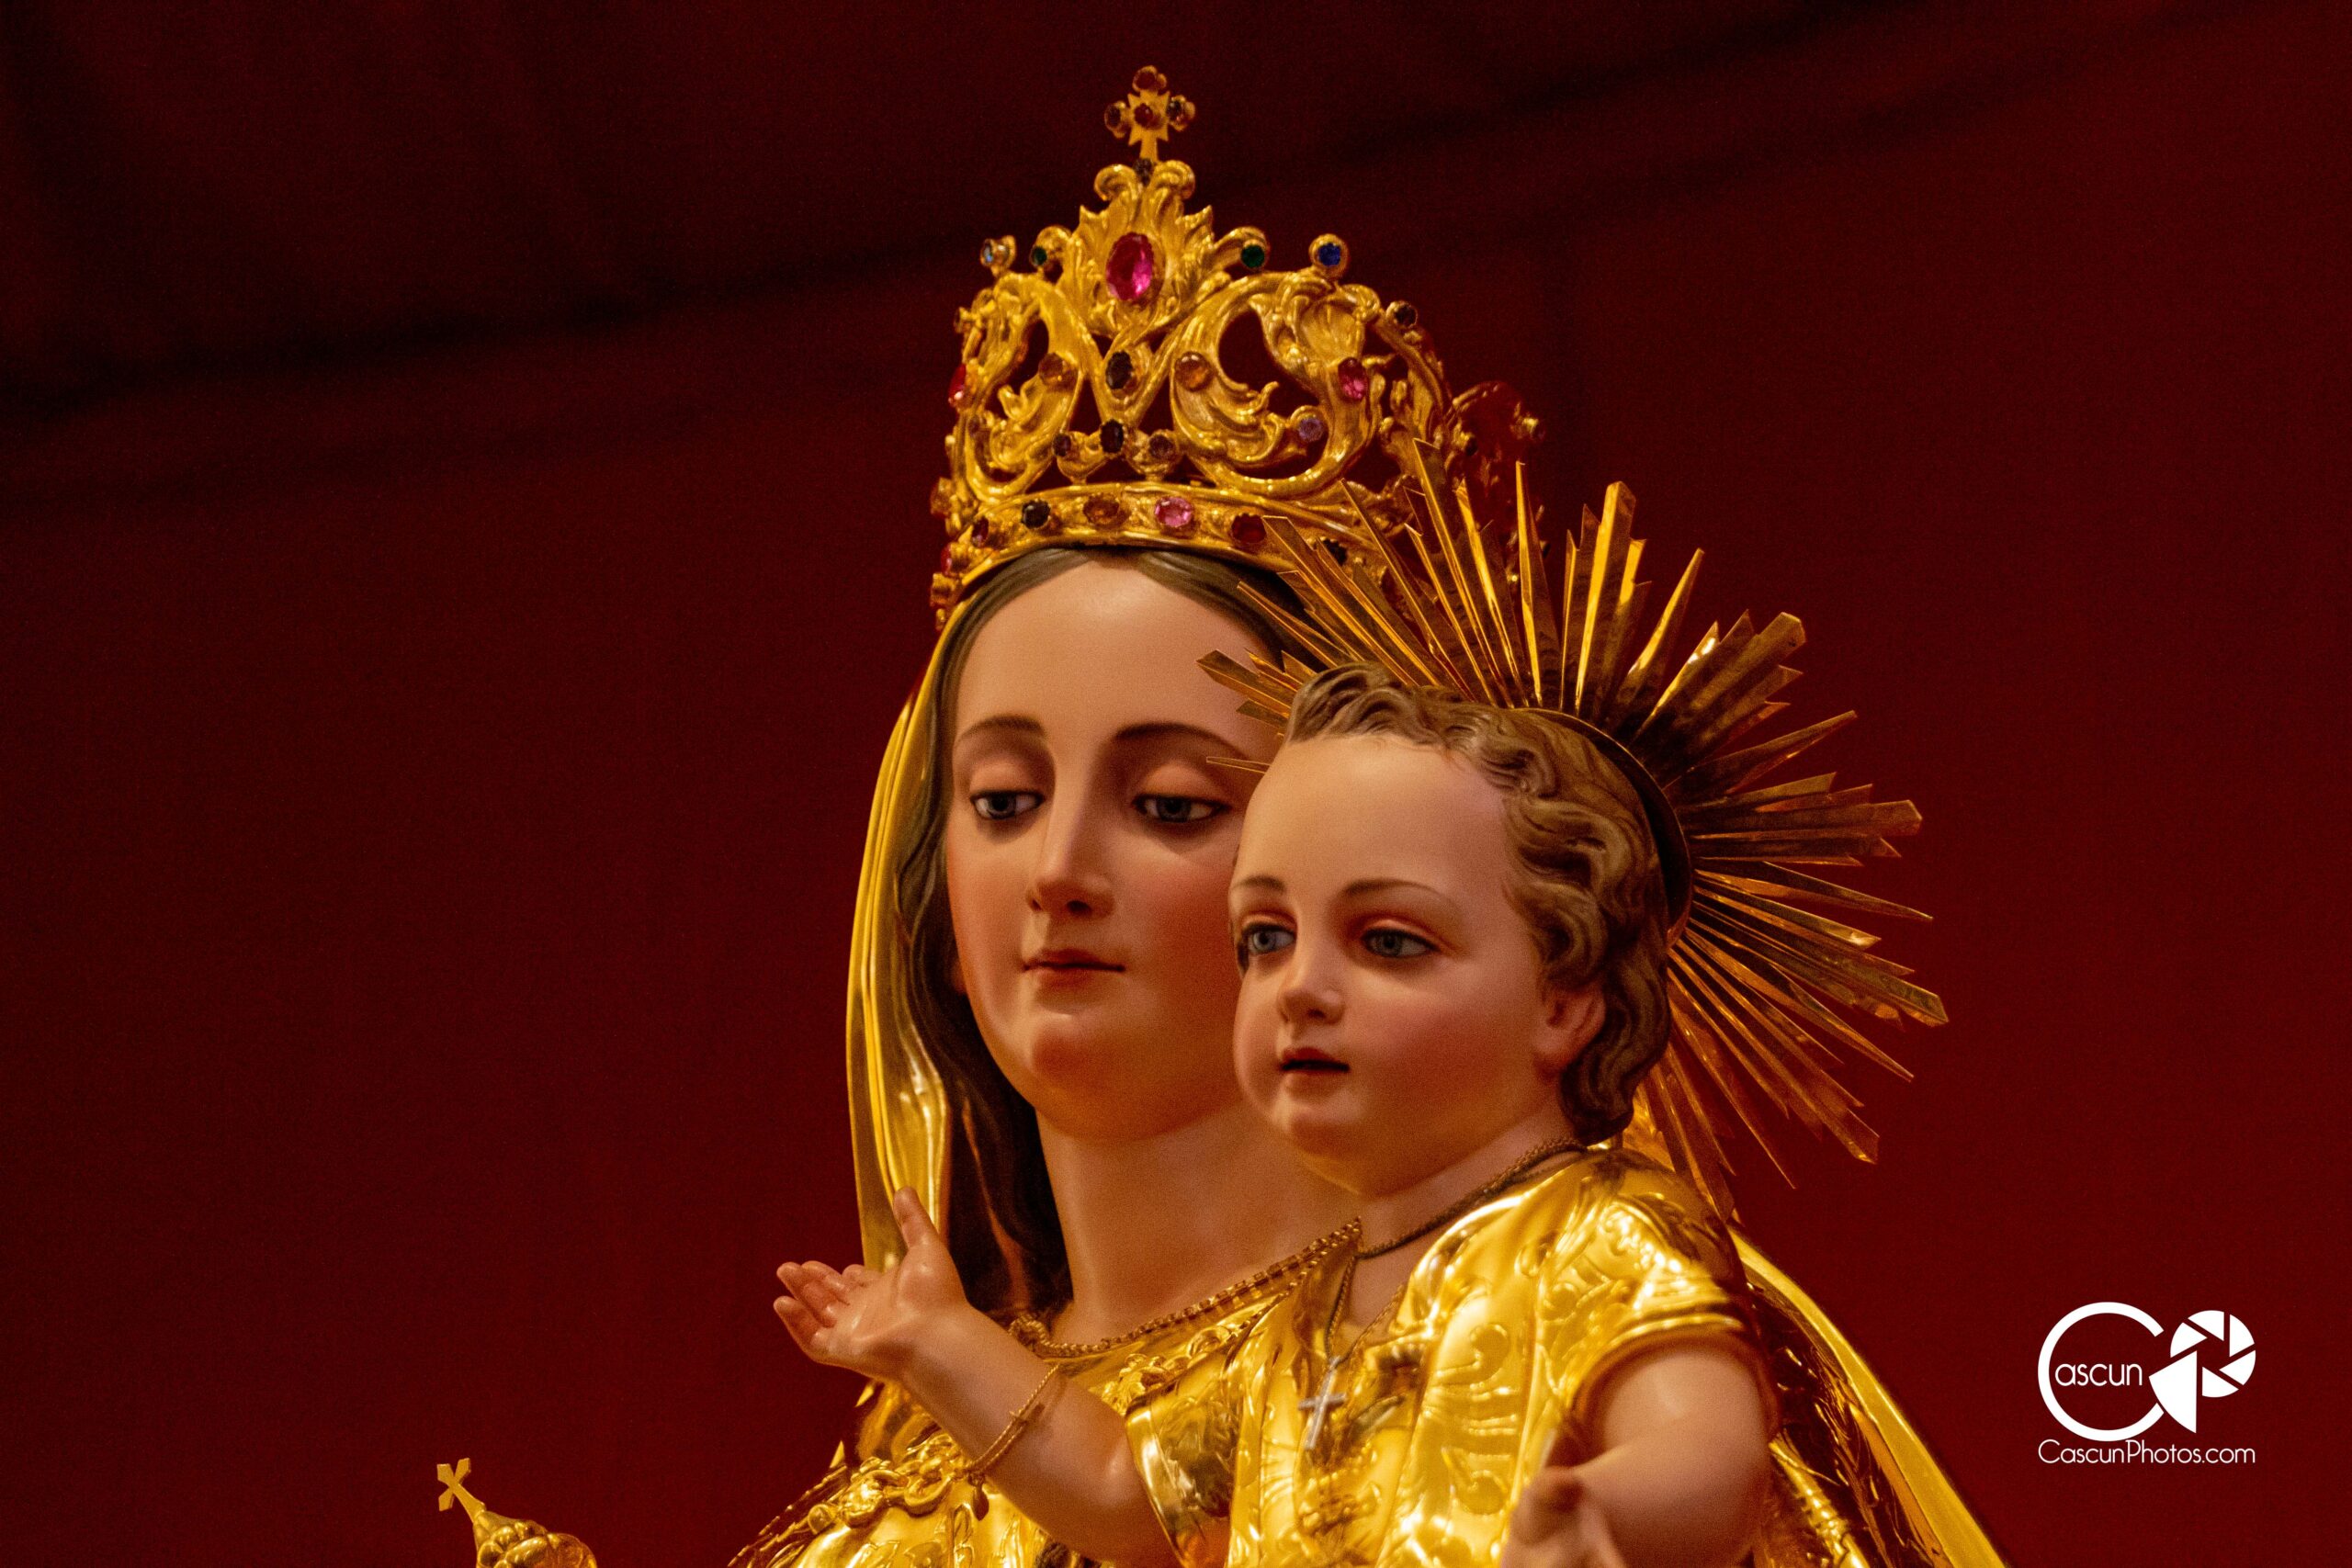 Our Lady of Loreto Statue Ghajnsielem